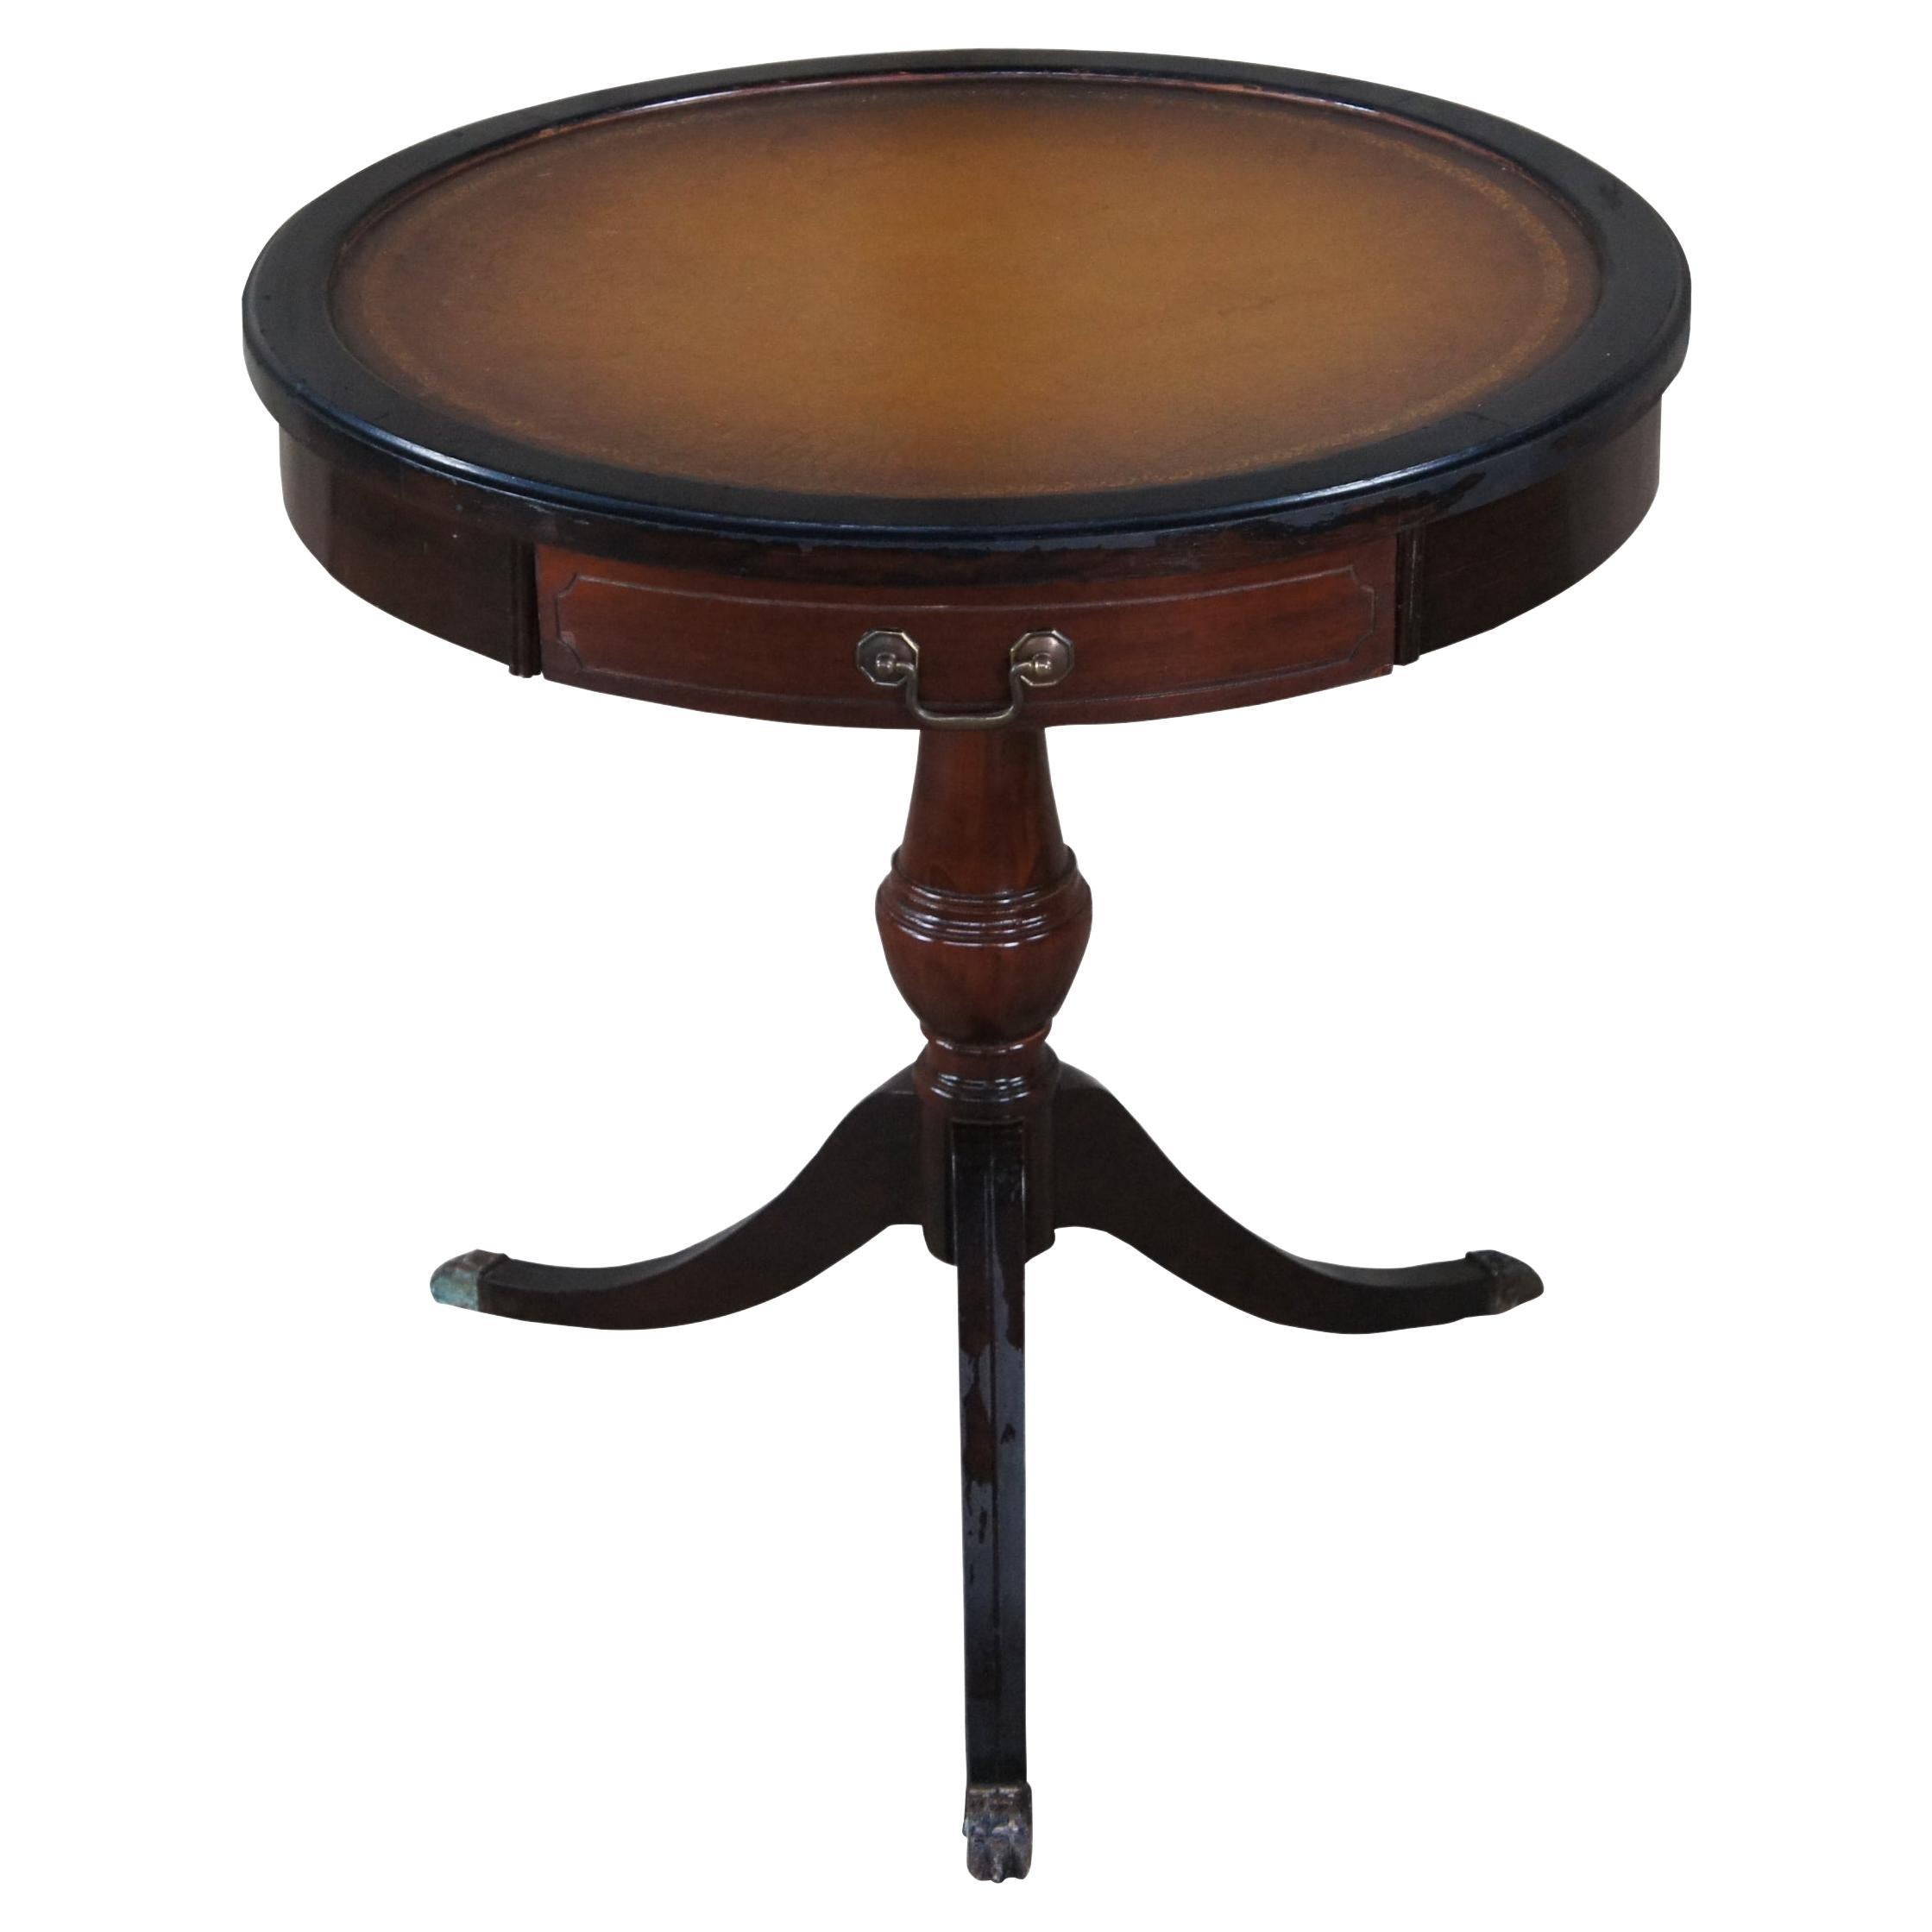 Mersman Mid Century Mahogany Leather Pedestal Drum Center Accent Table 26"